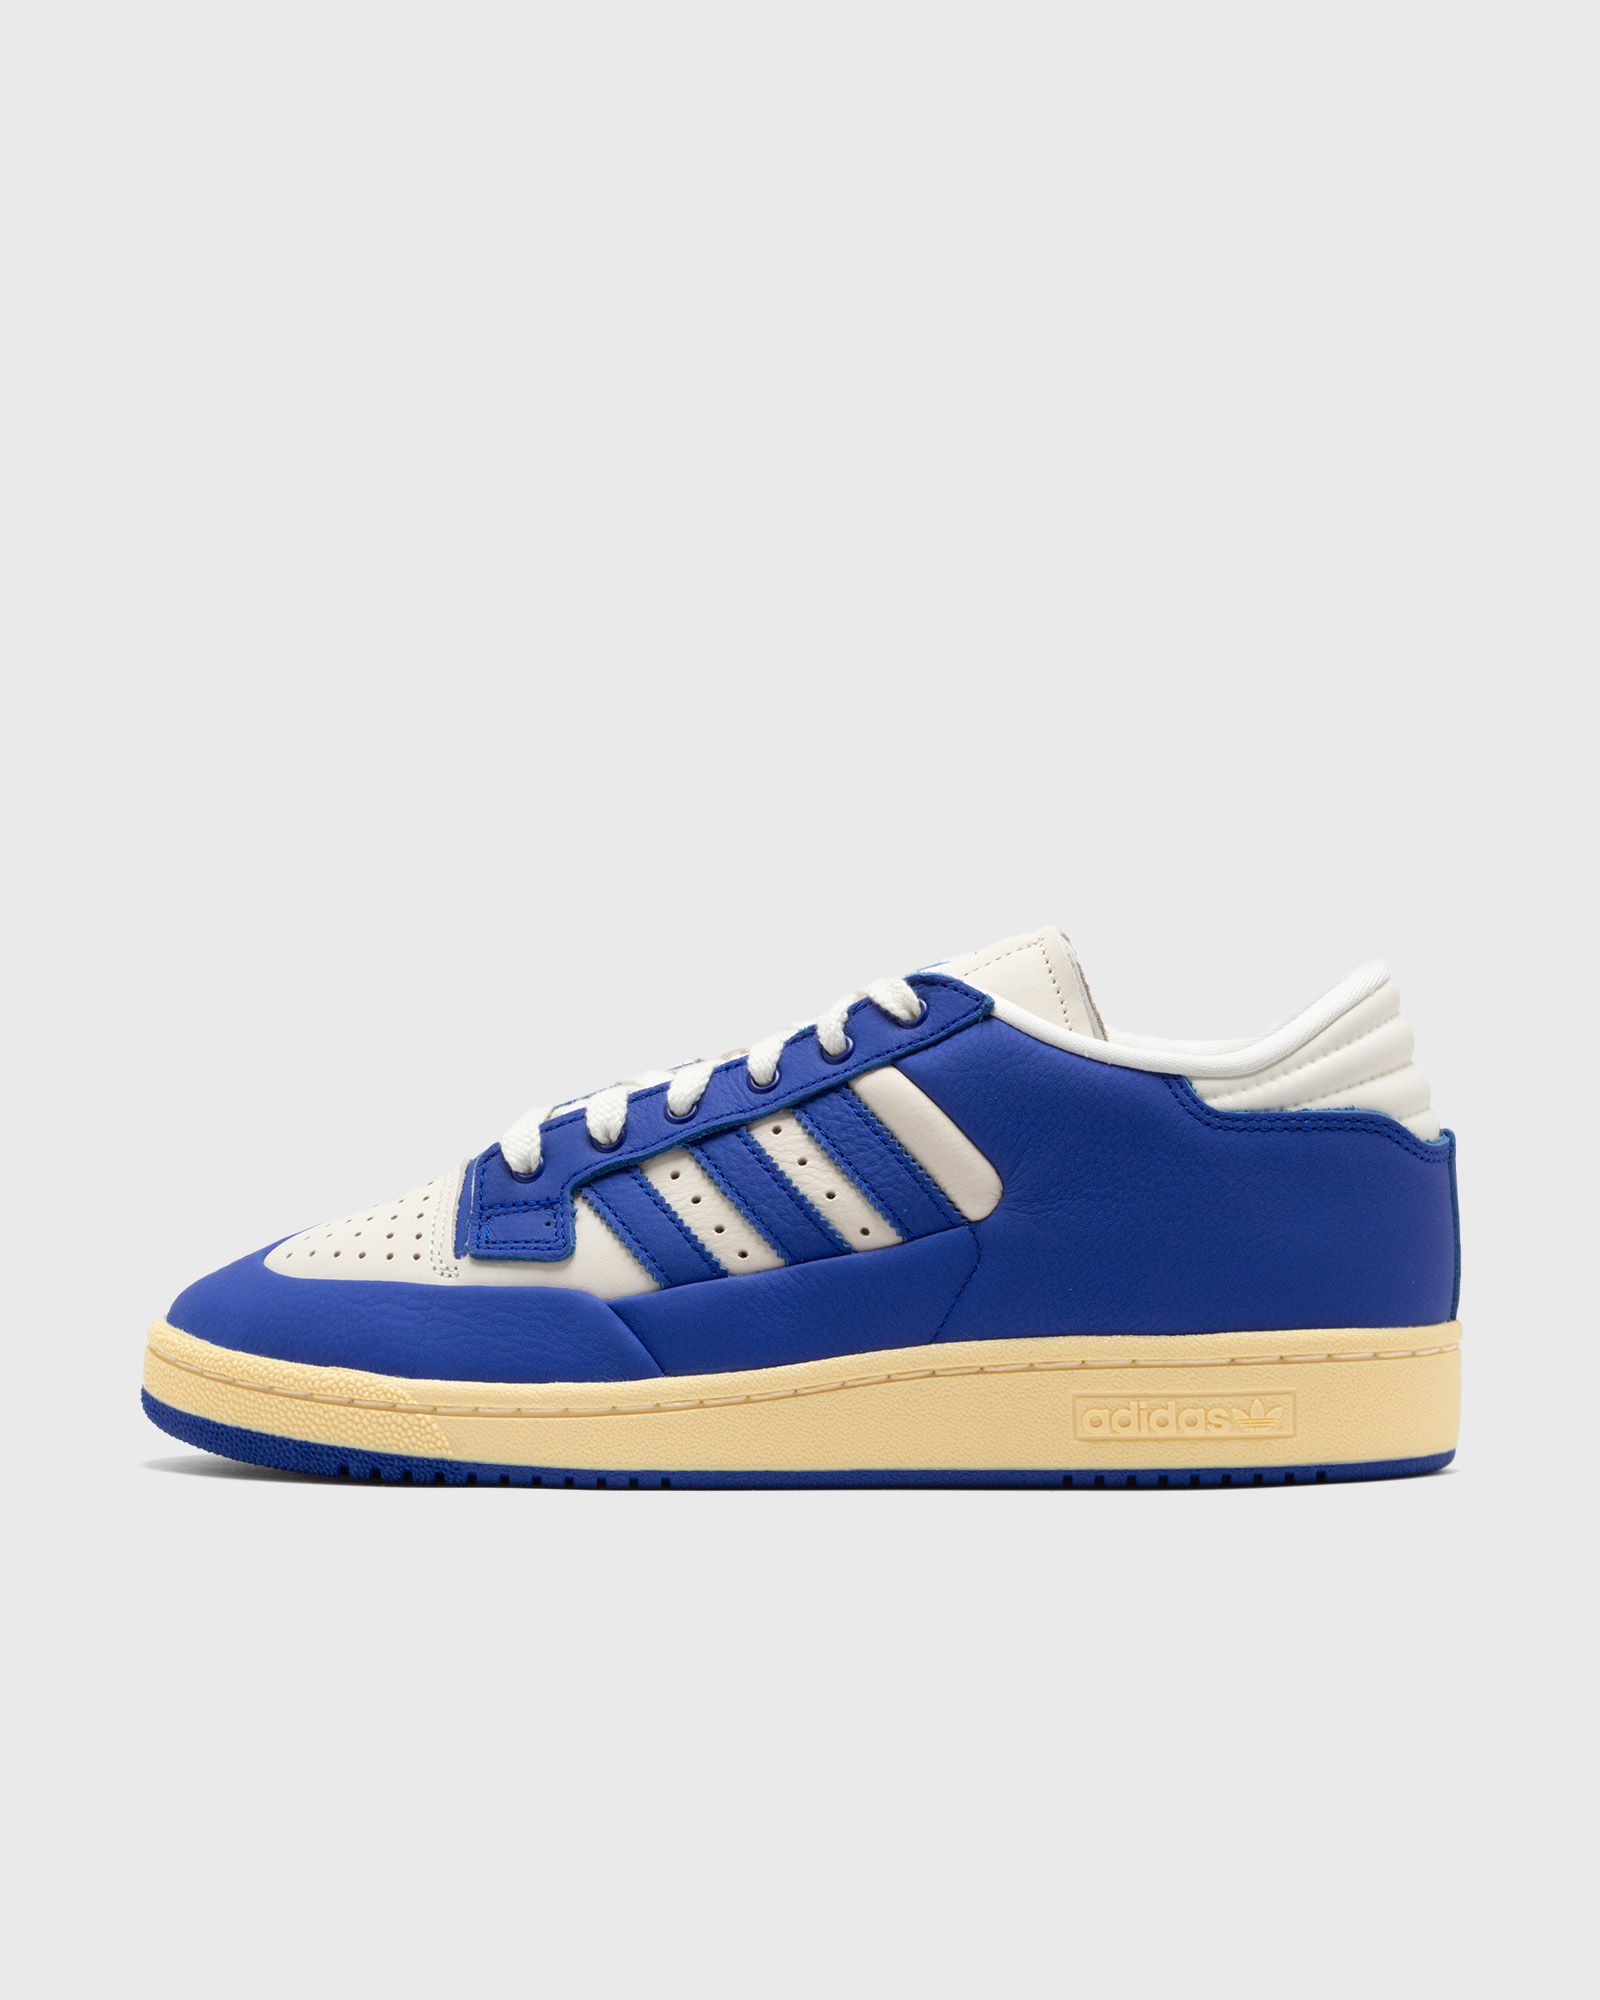 Adidas - centennial 85 lo 002 men lowtop blue in größe:47 1/3